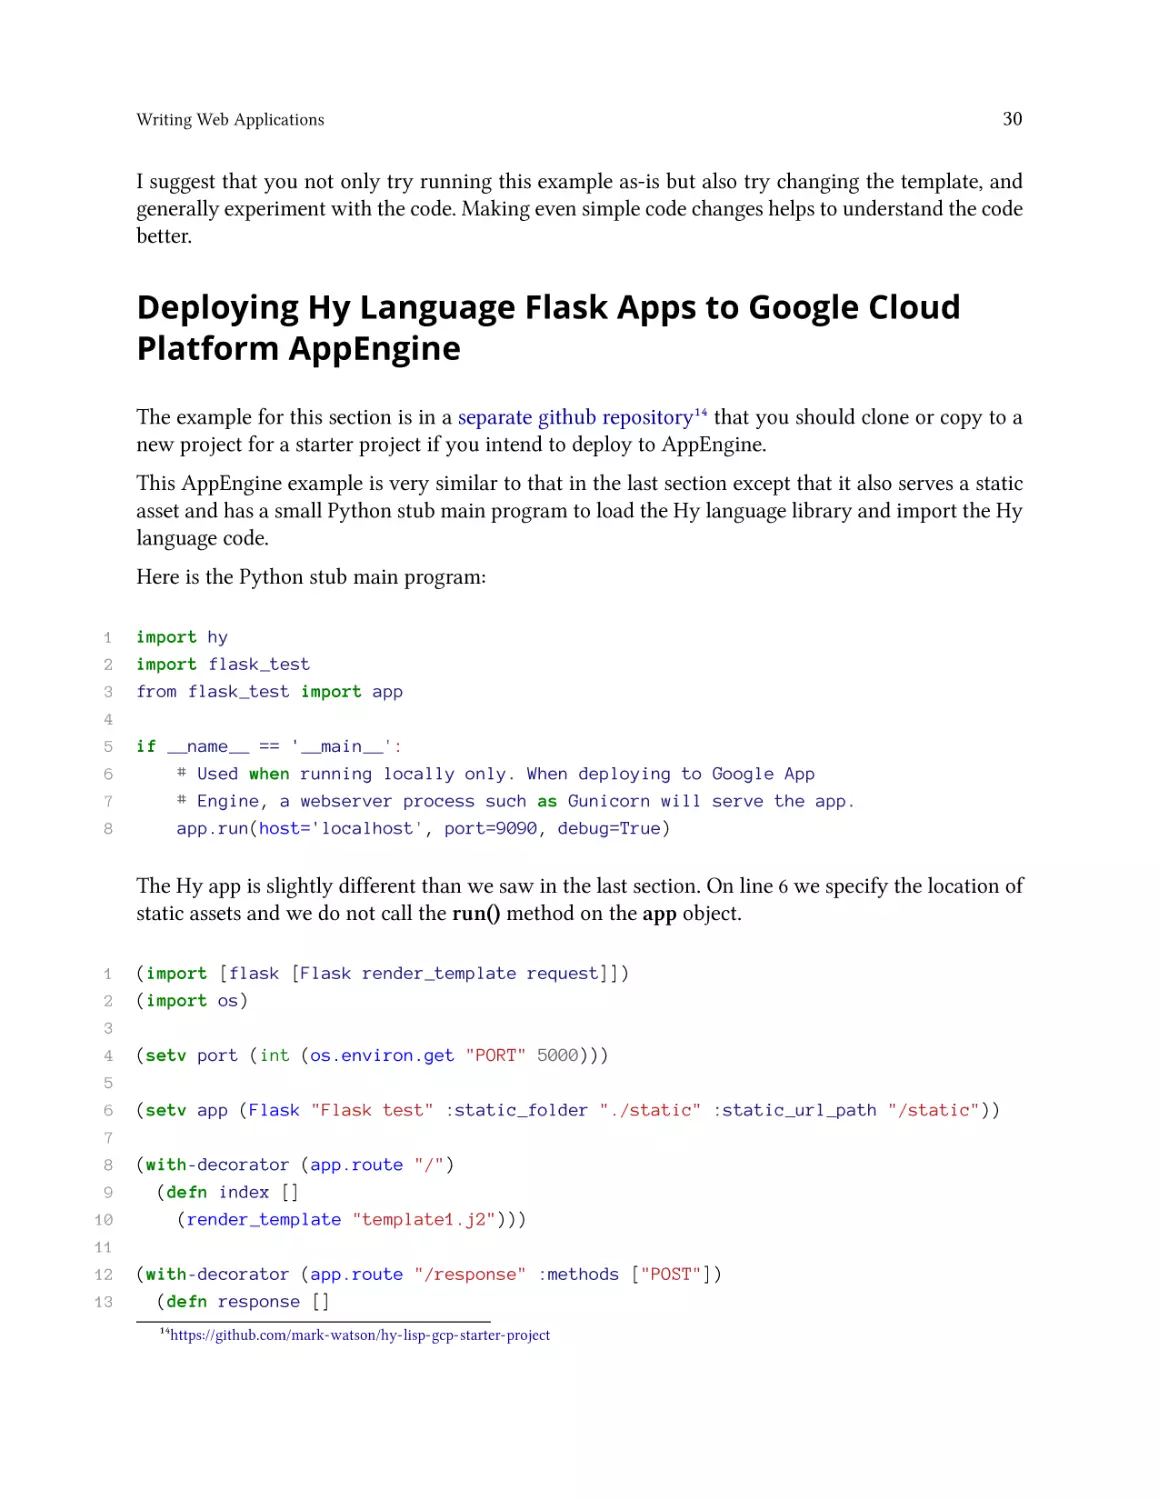 Deploying Hy Language Flask Apps to Google Cloud Platform AppEngine